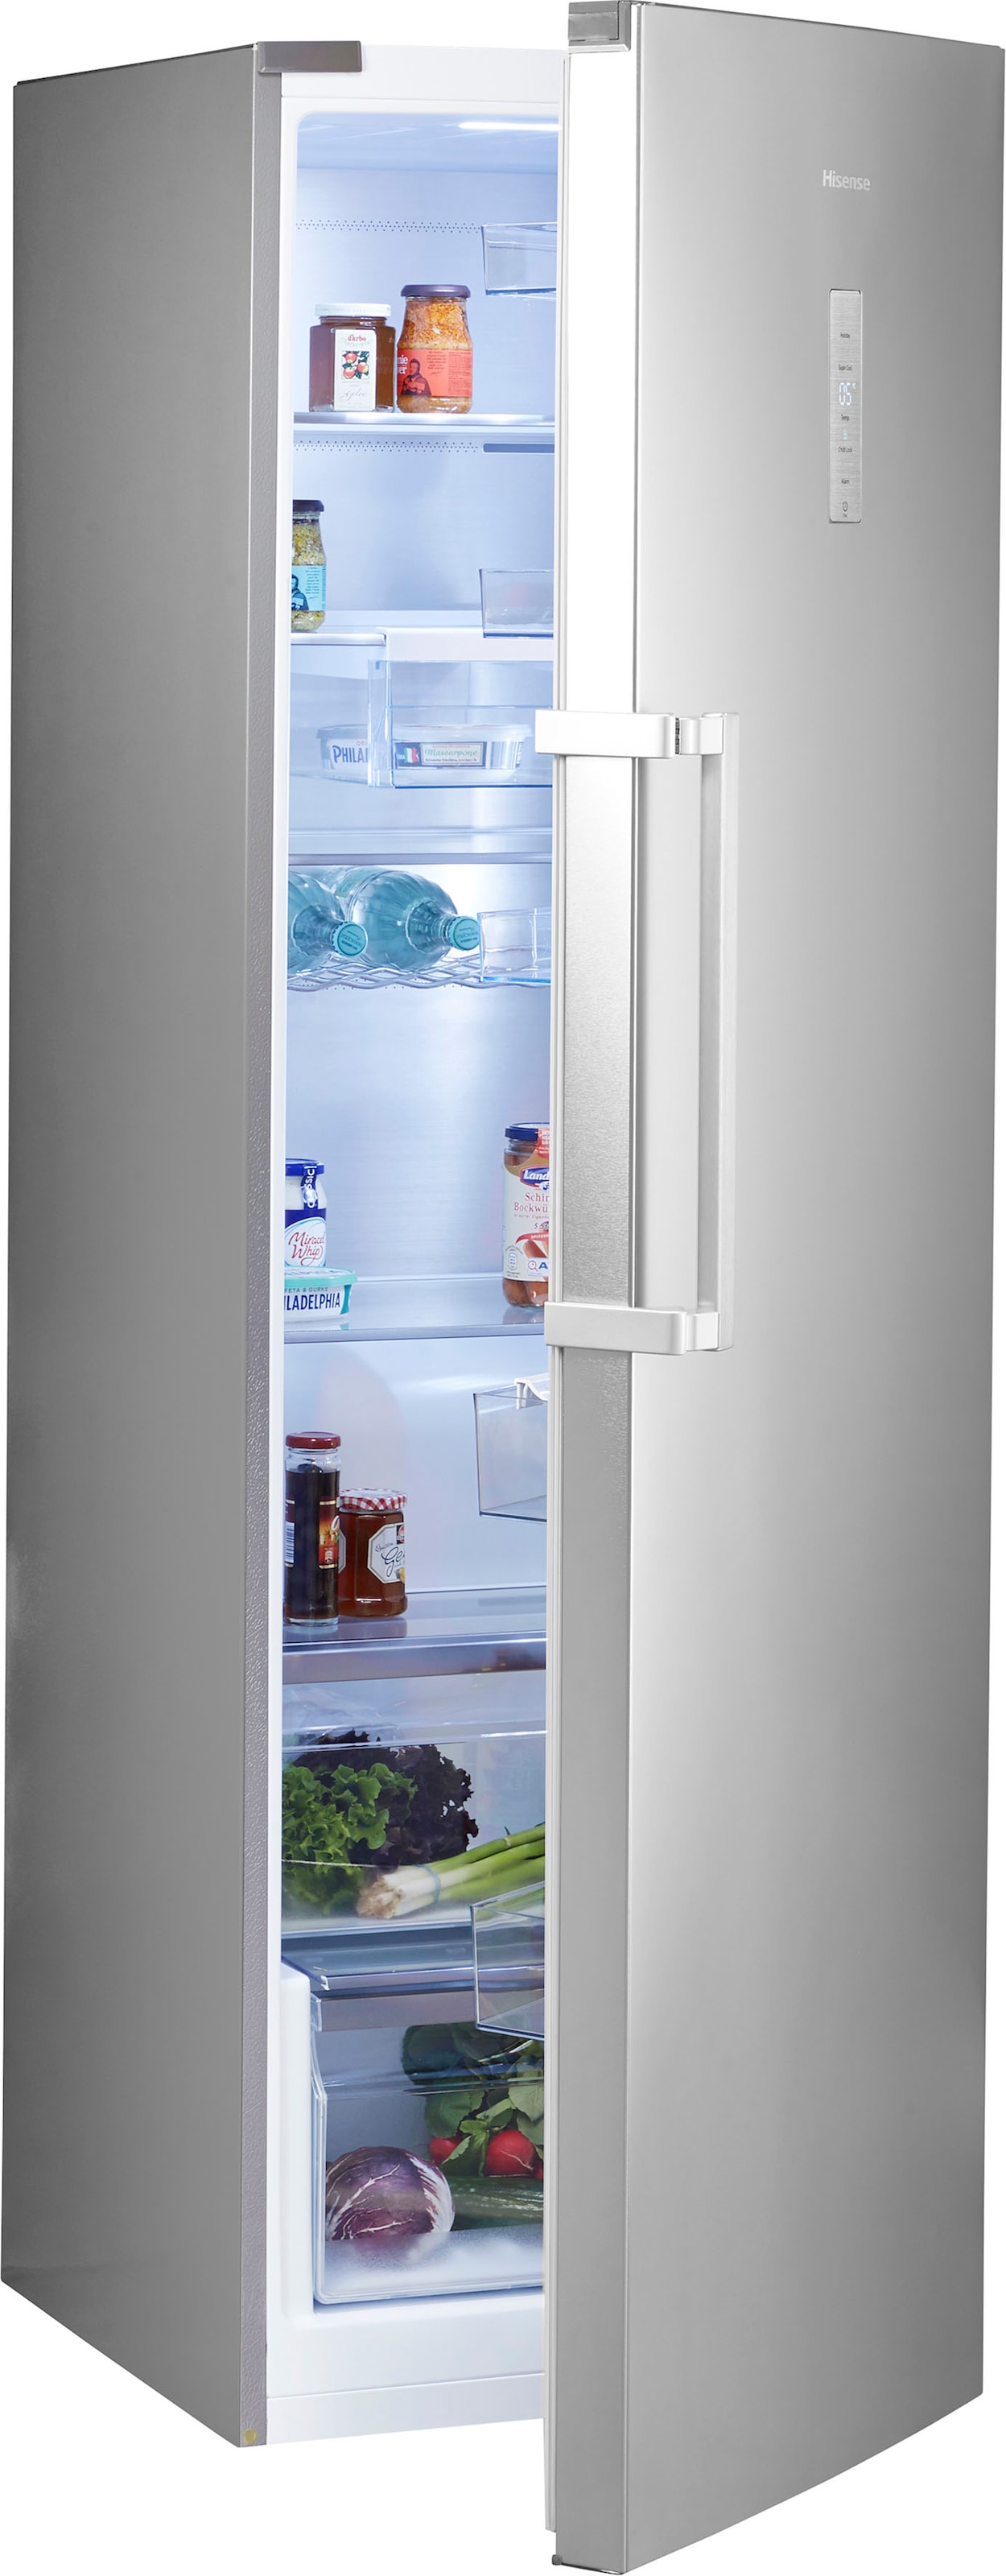 Kühlschrank, RL481N4BIE, 185,5 cm hoch, 59,5 cm breit